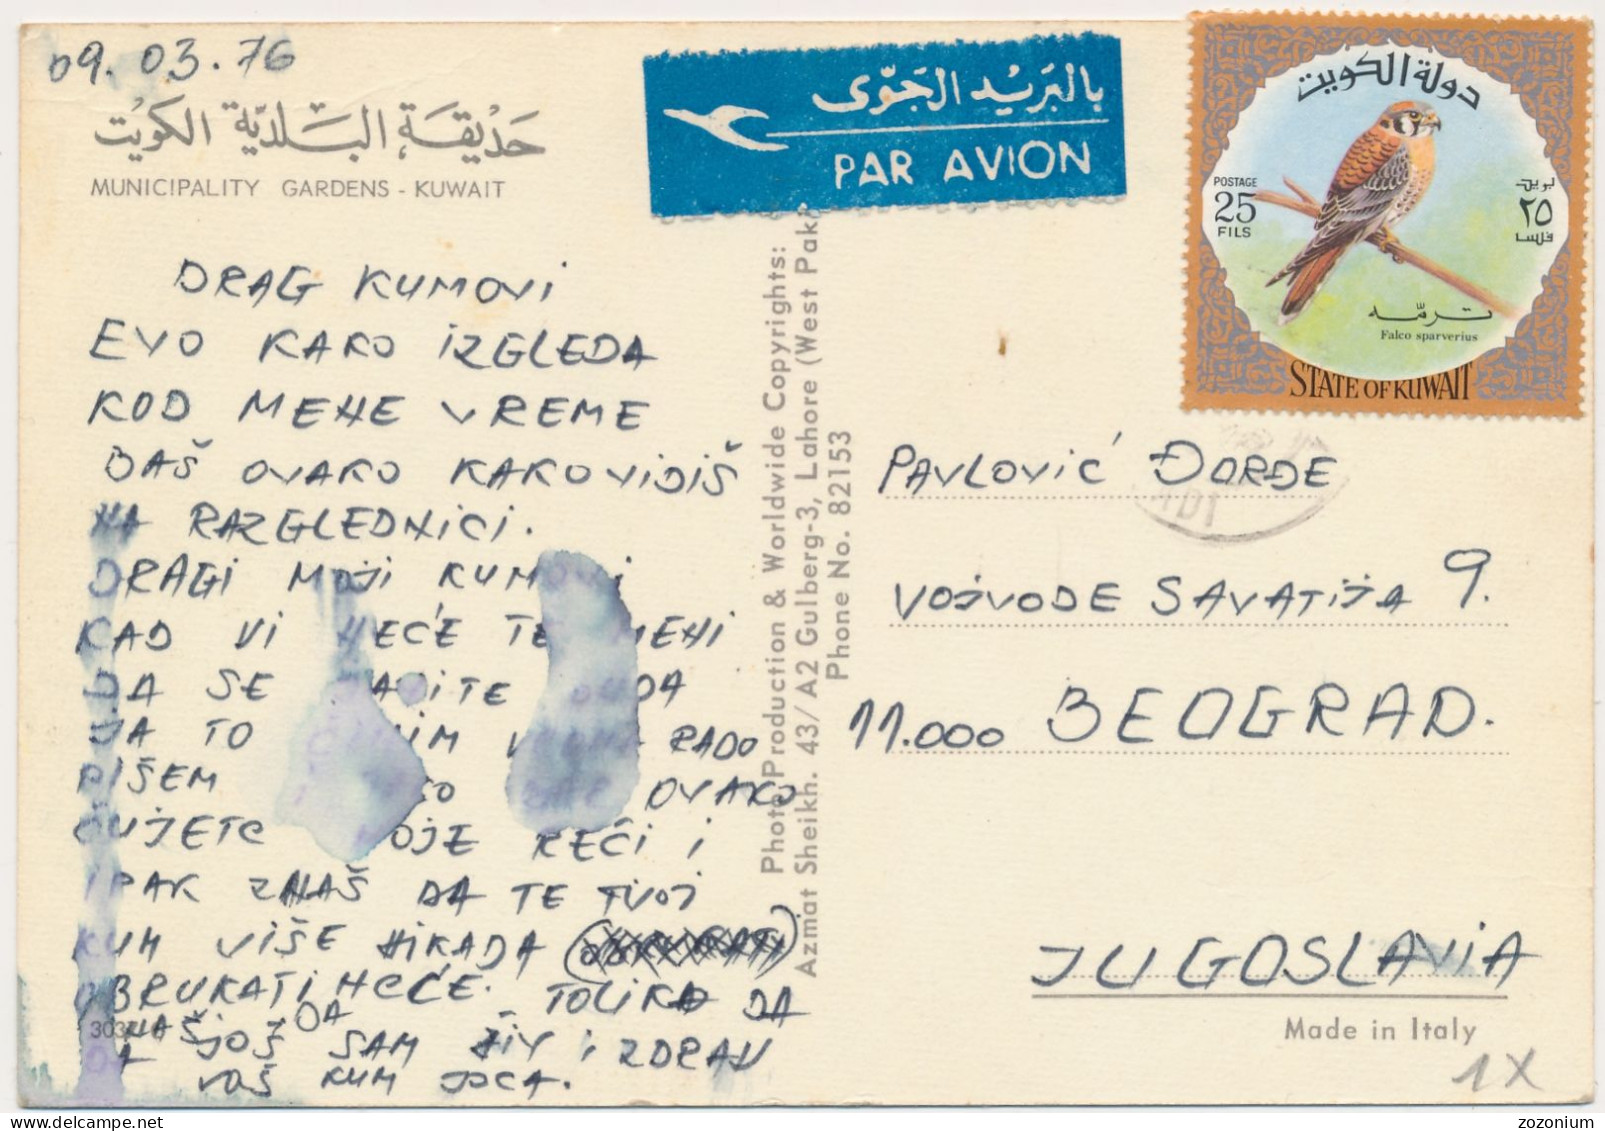 KUWAIT Municipality Gardens 1976 Nice Stamp OLD POSTCARD  RPPC PC PPC - Kuwait